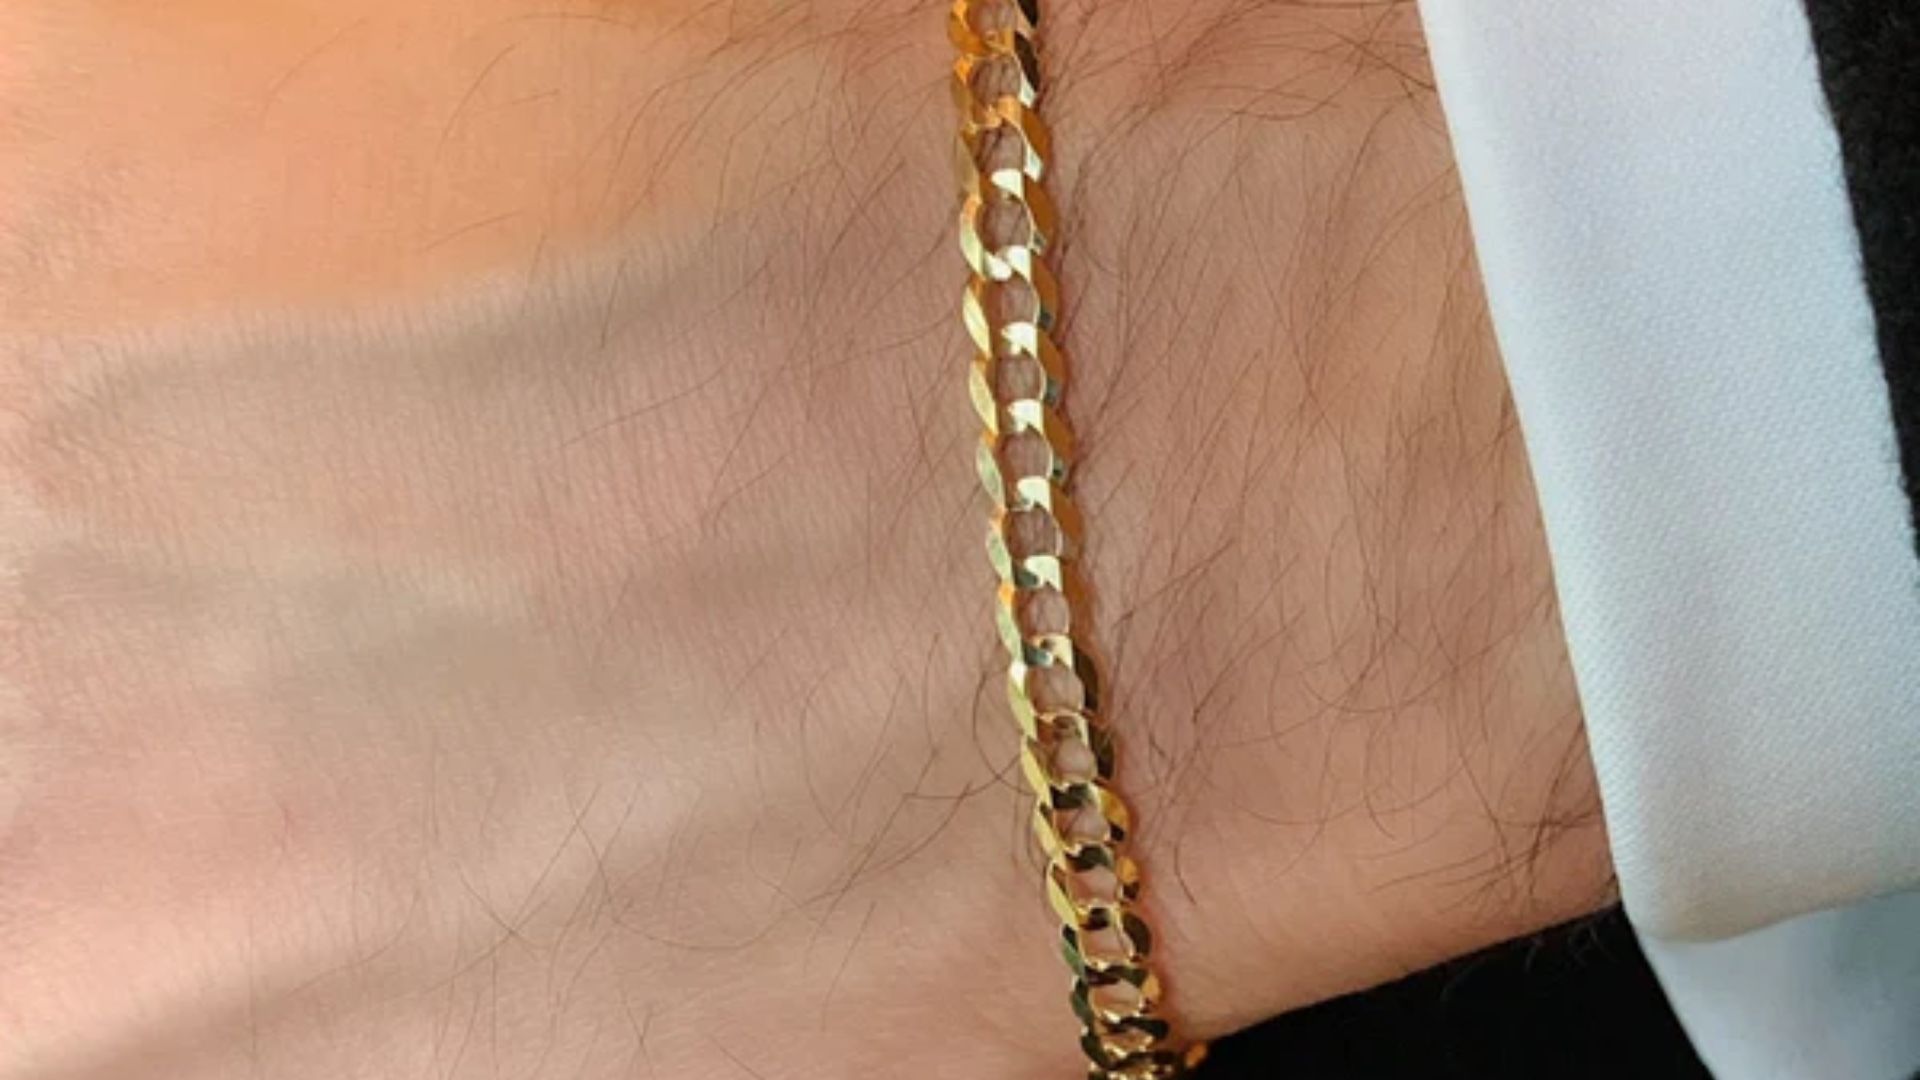 Gold Chain On Man's Wrist